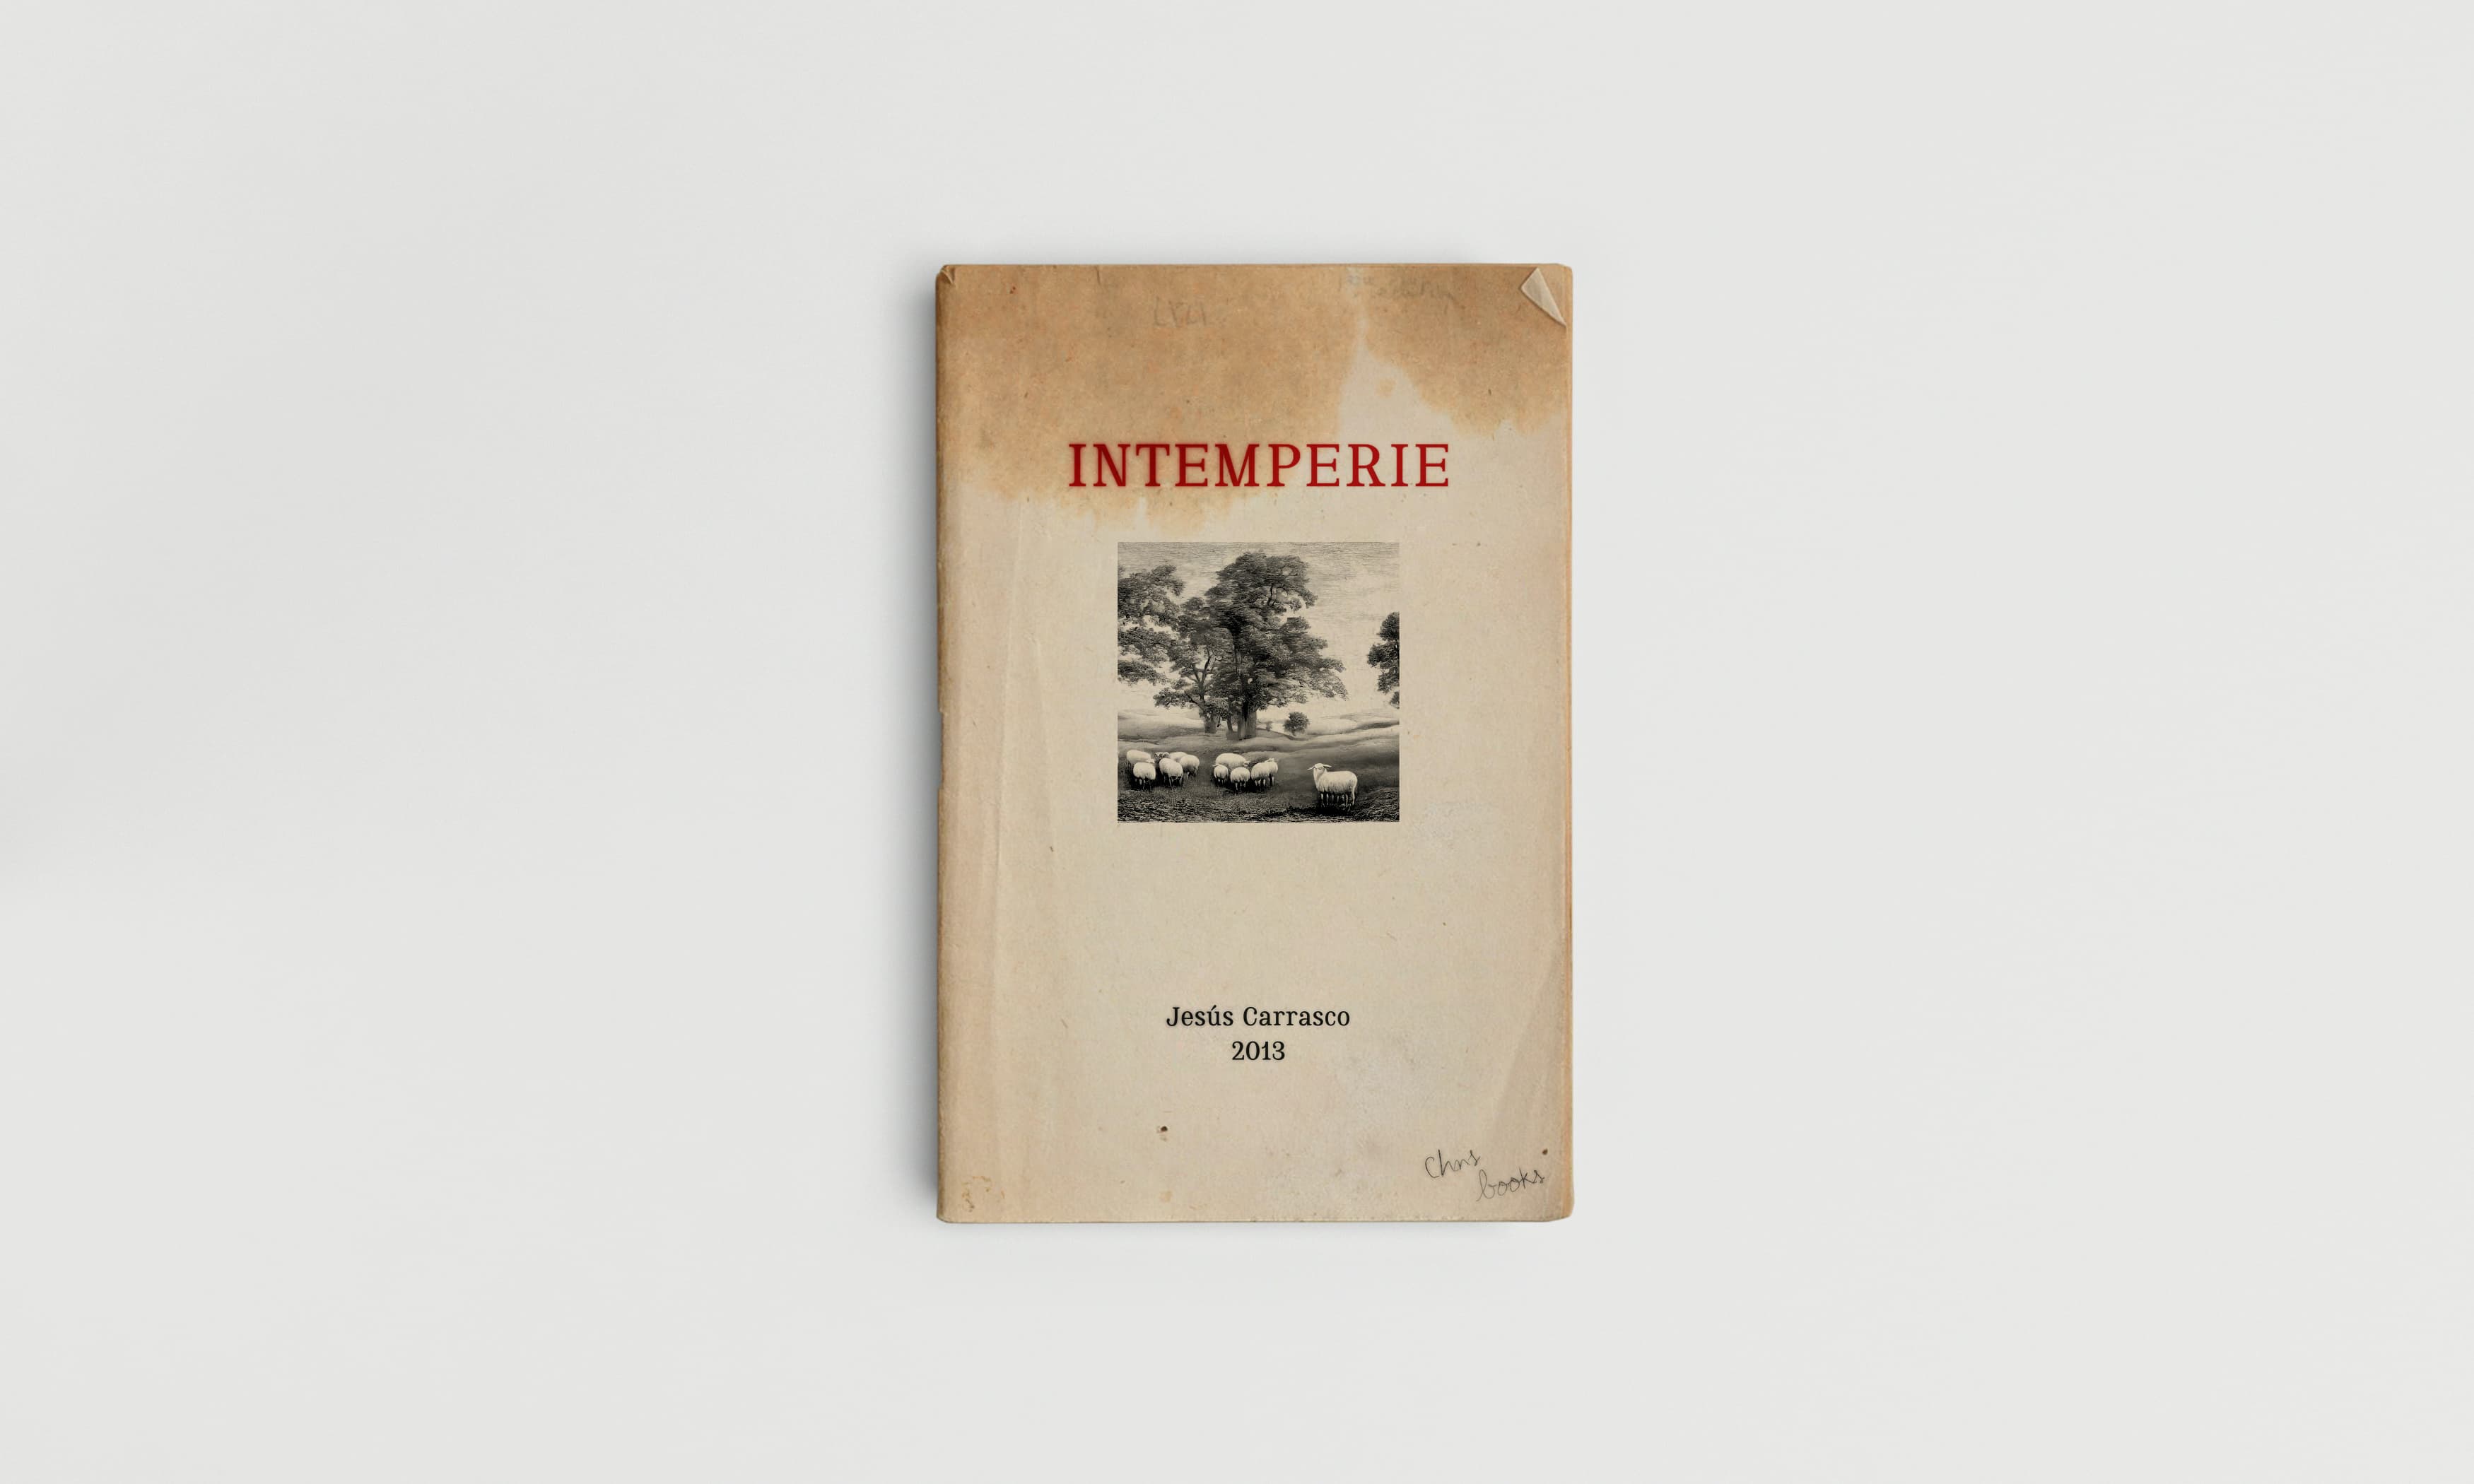 Intemperie by Jesus Carrasco, book cover design